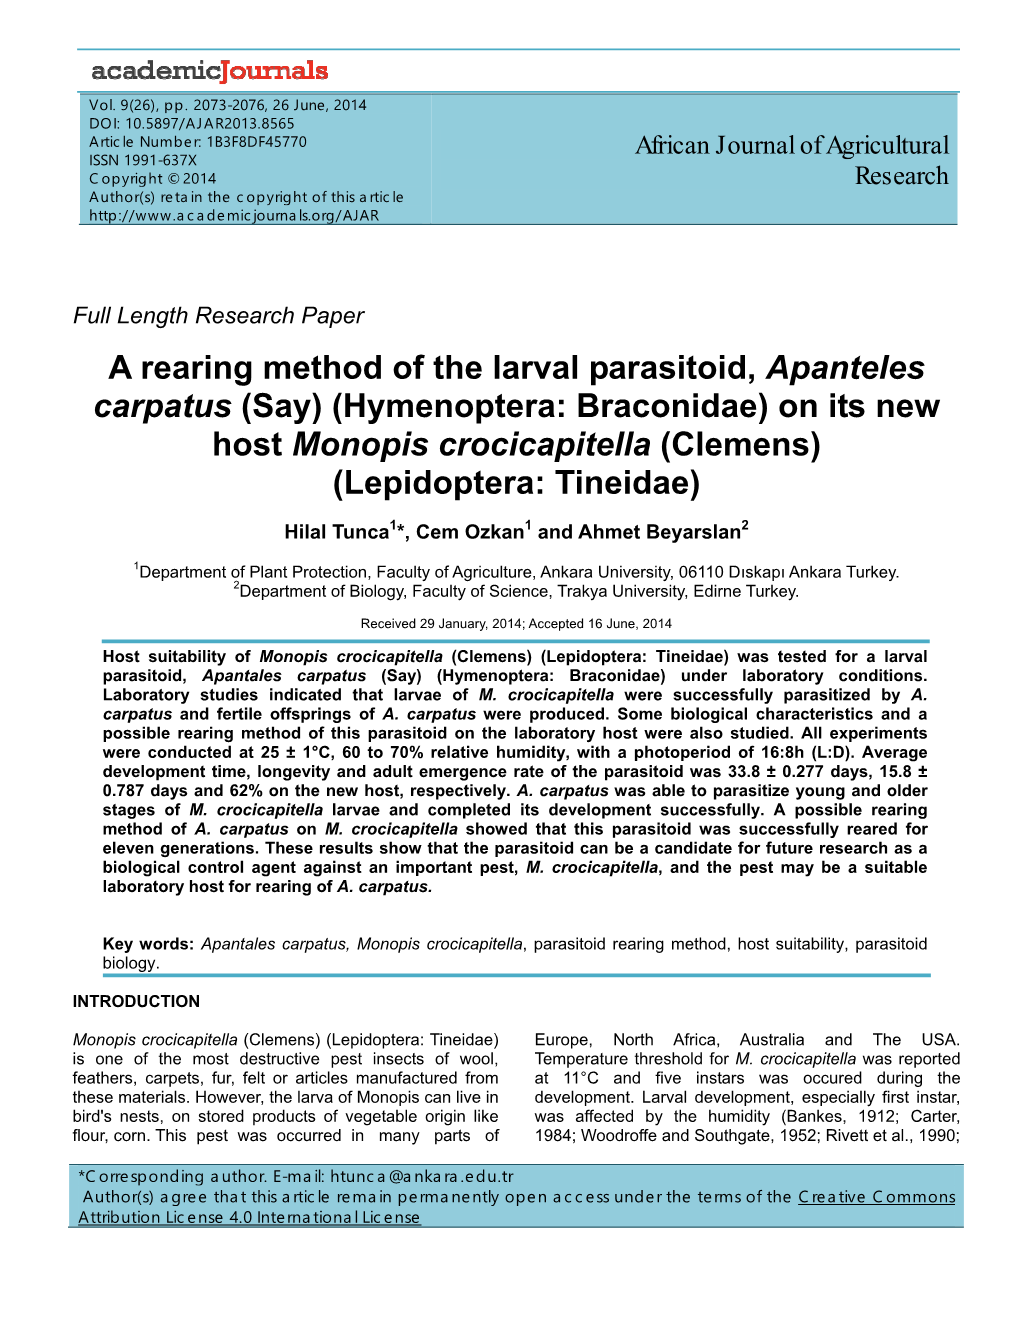 A Rearing Method of the Larval Parasitoid, Apanteles Carpatus